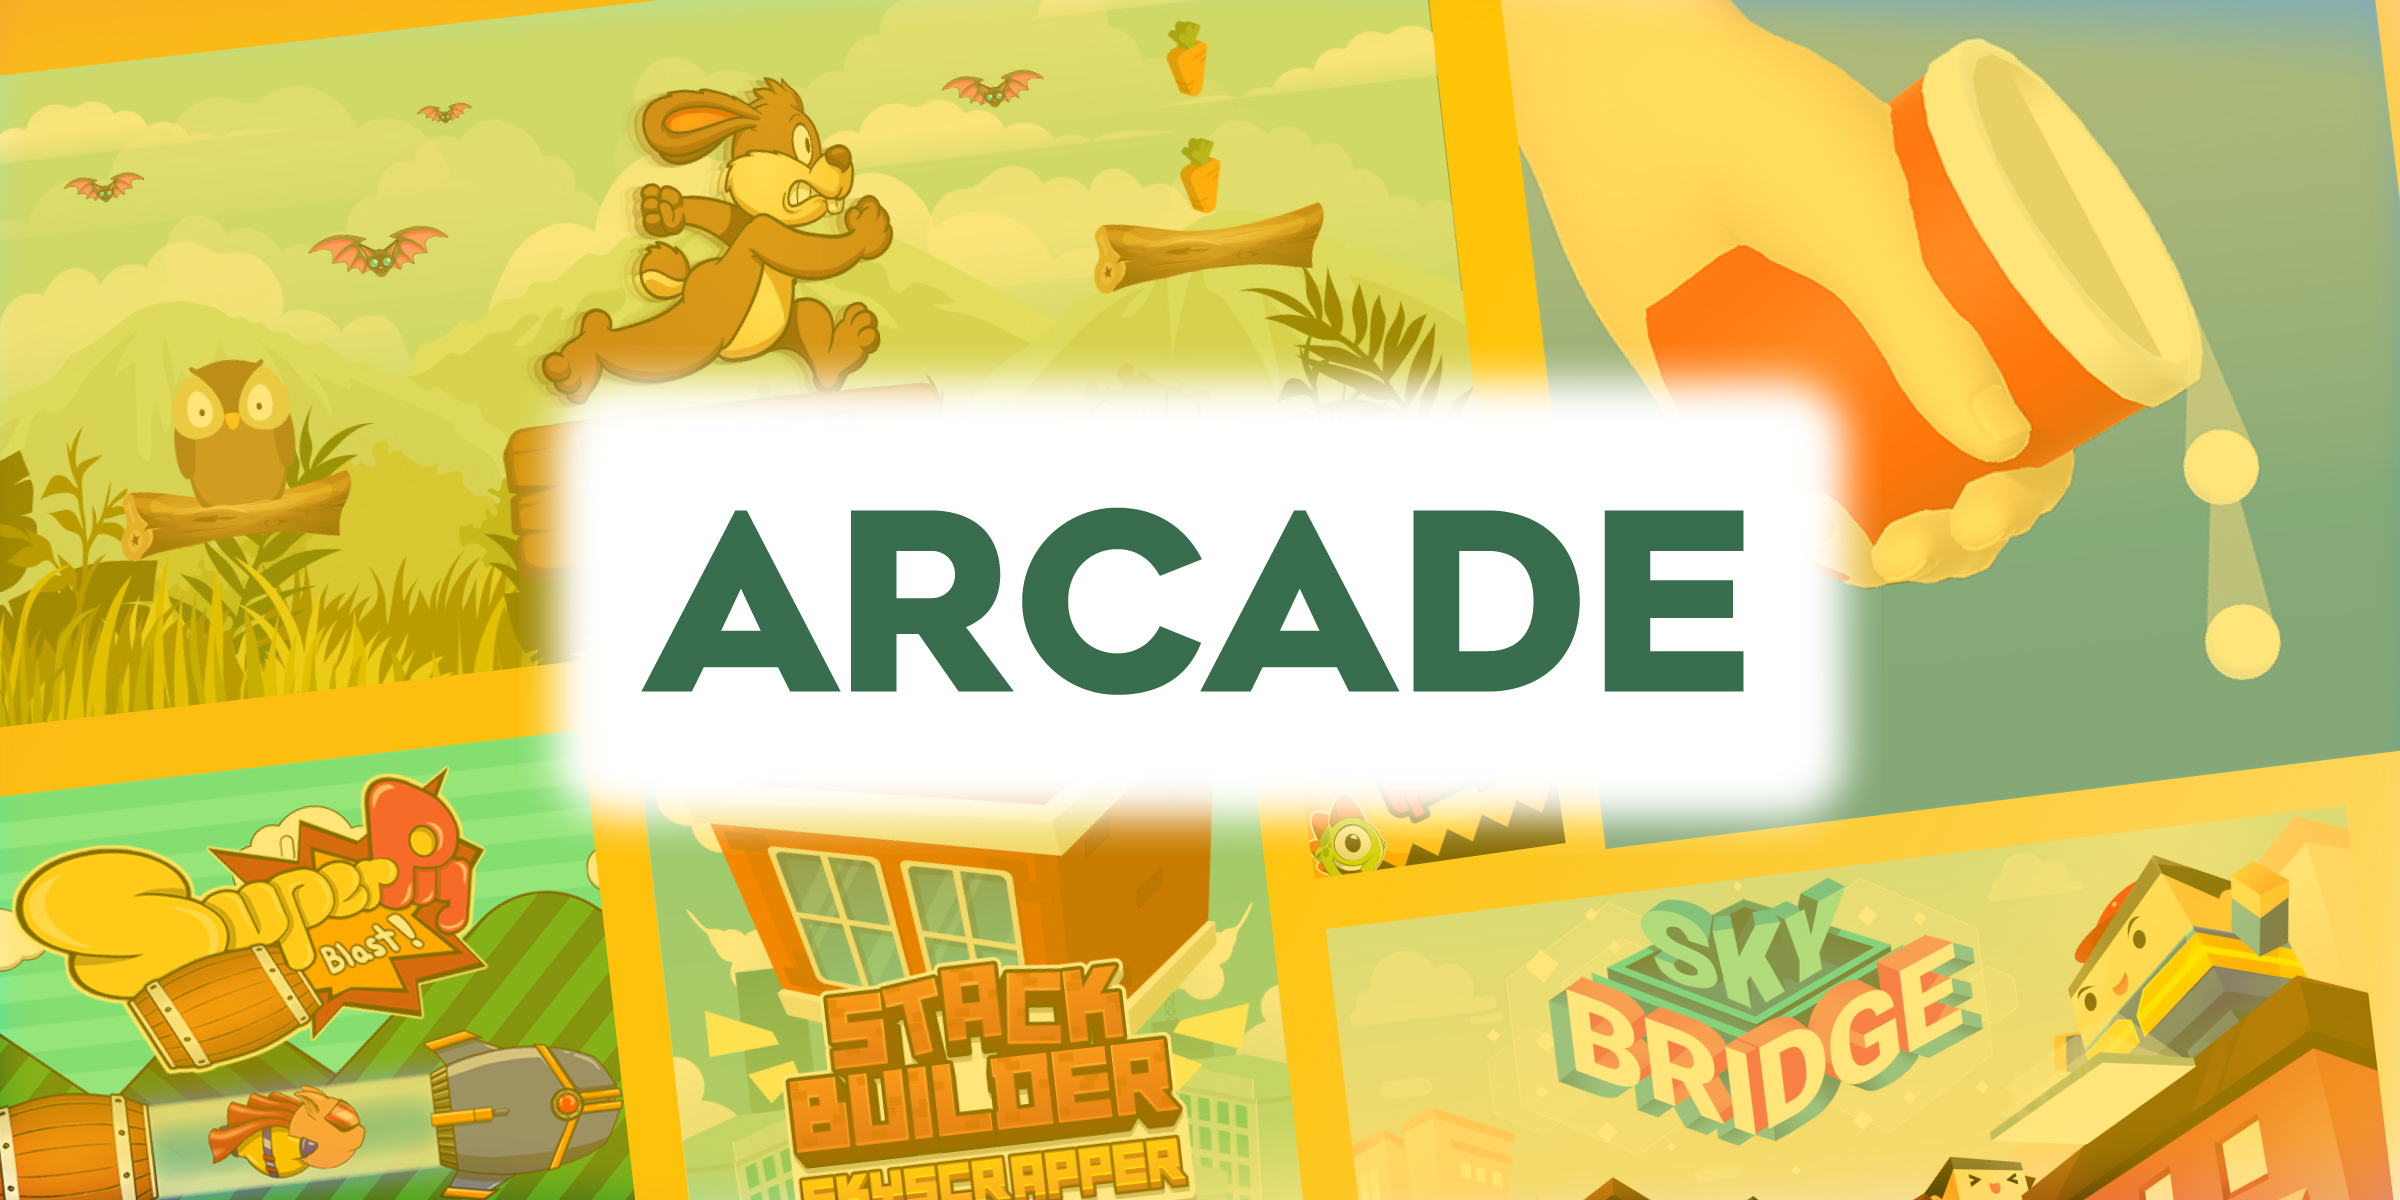 Arcade Nostalgia: A Look Back and Ahead